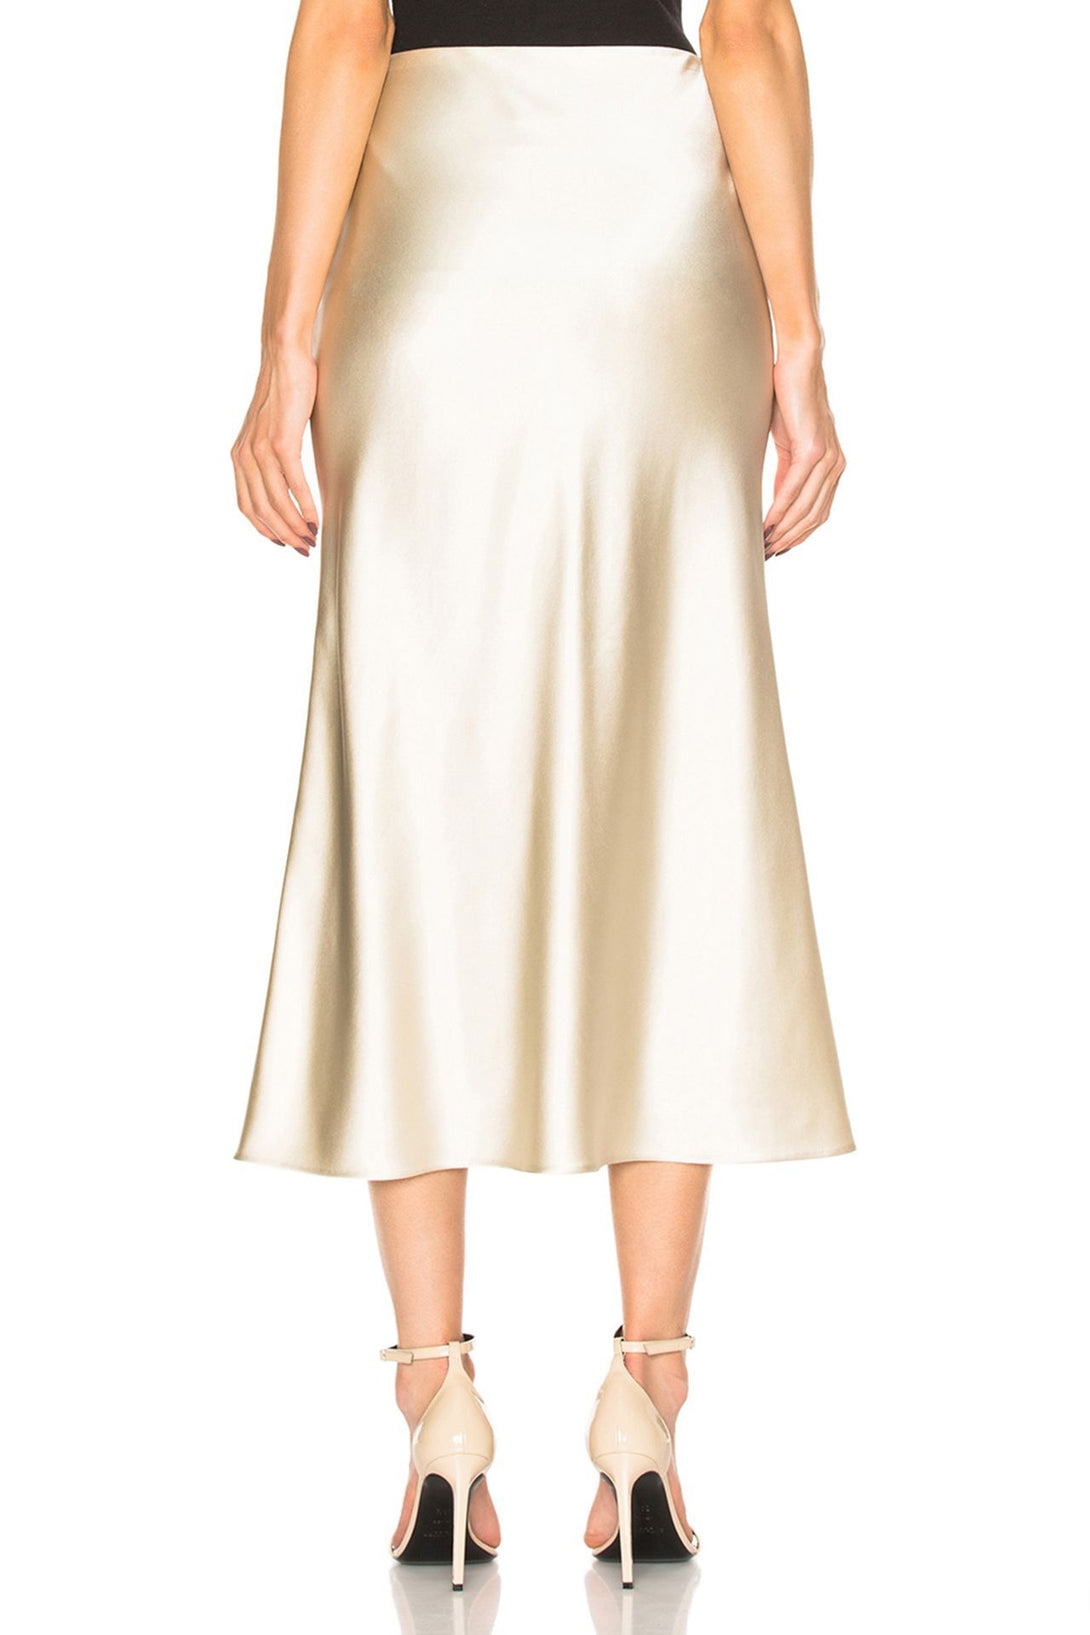 Silk-Skirt-In-White-For-Womens-By-Kyle-Richard